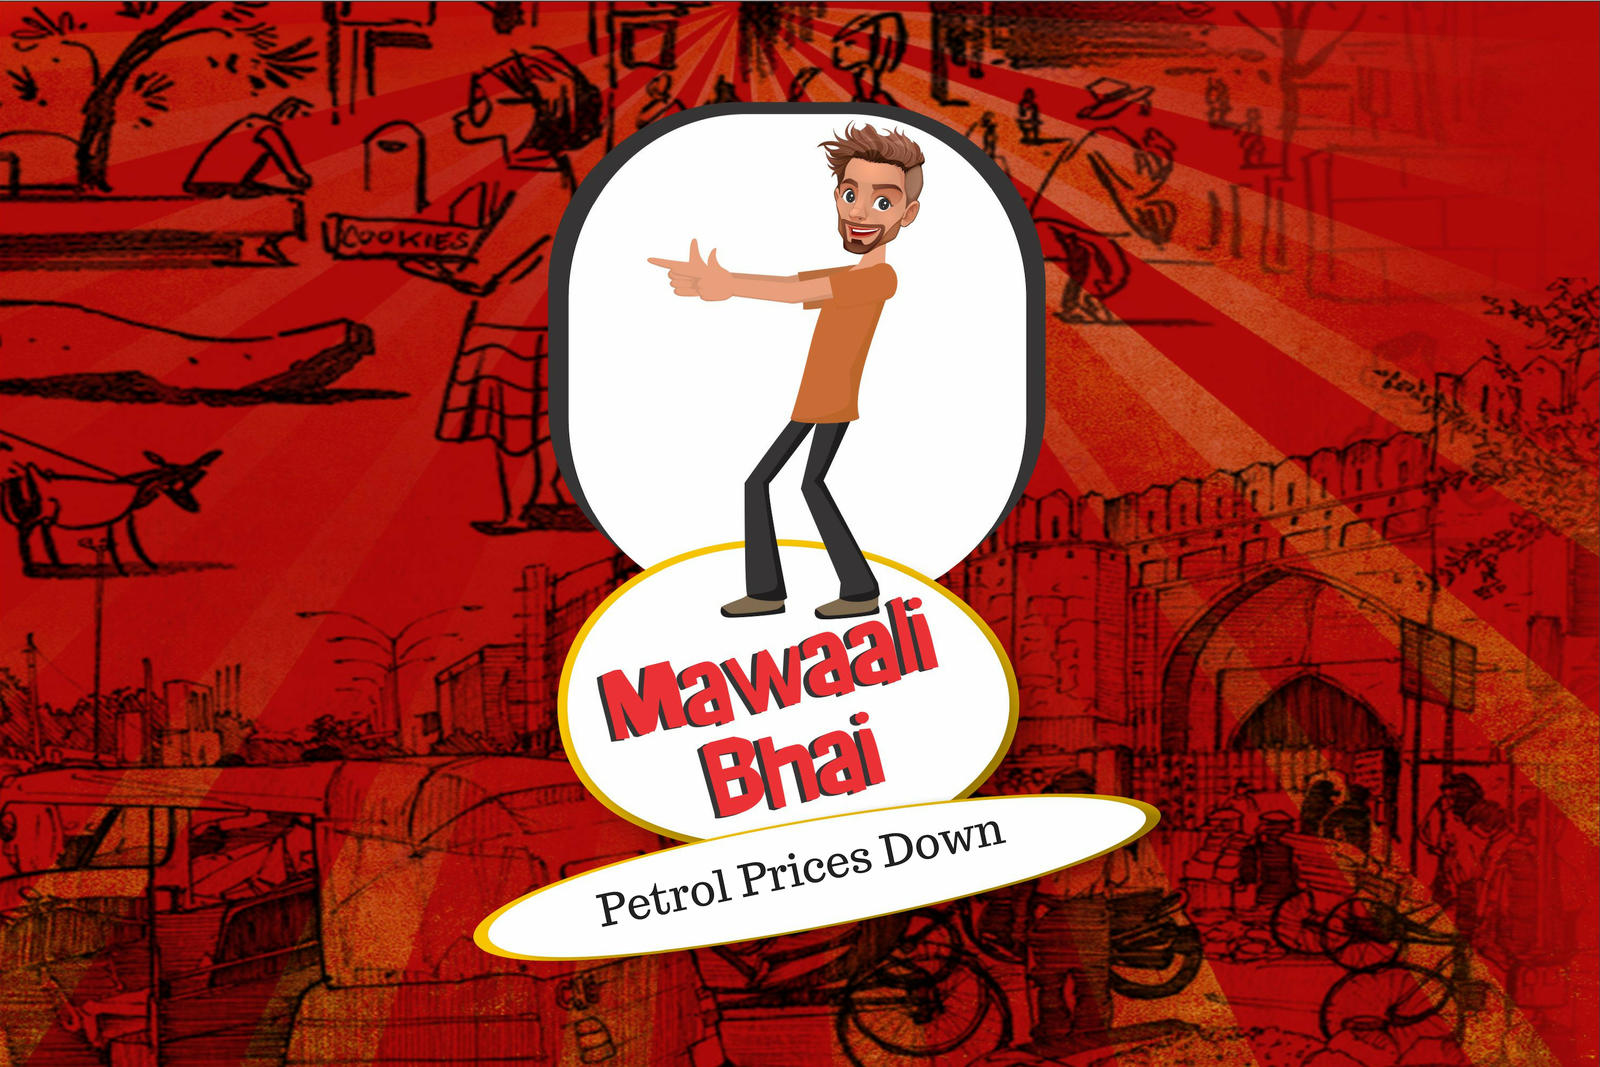 Mawaali Bhai - Petrol Prices Down